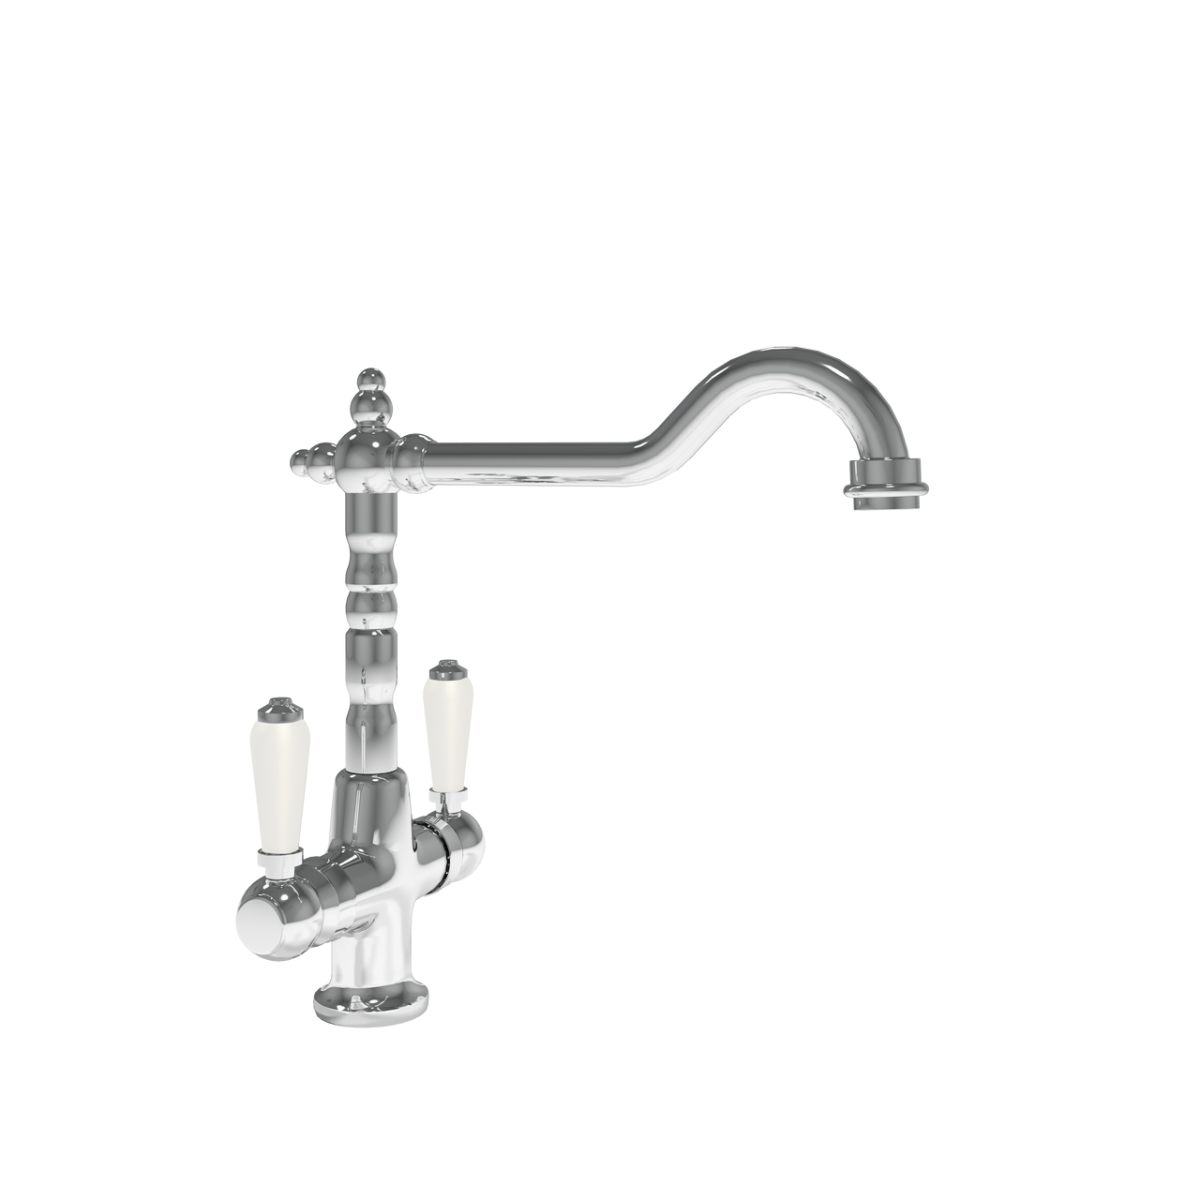 Alma chrome dual lever tap with white ceramic handles